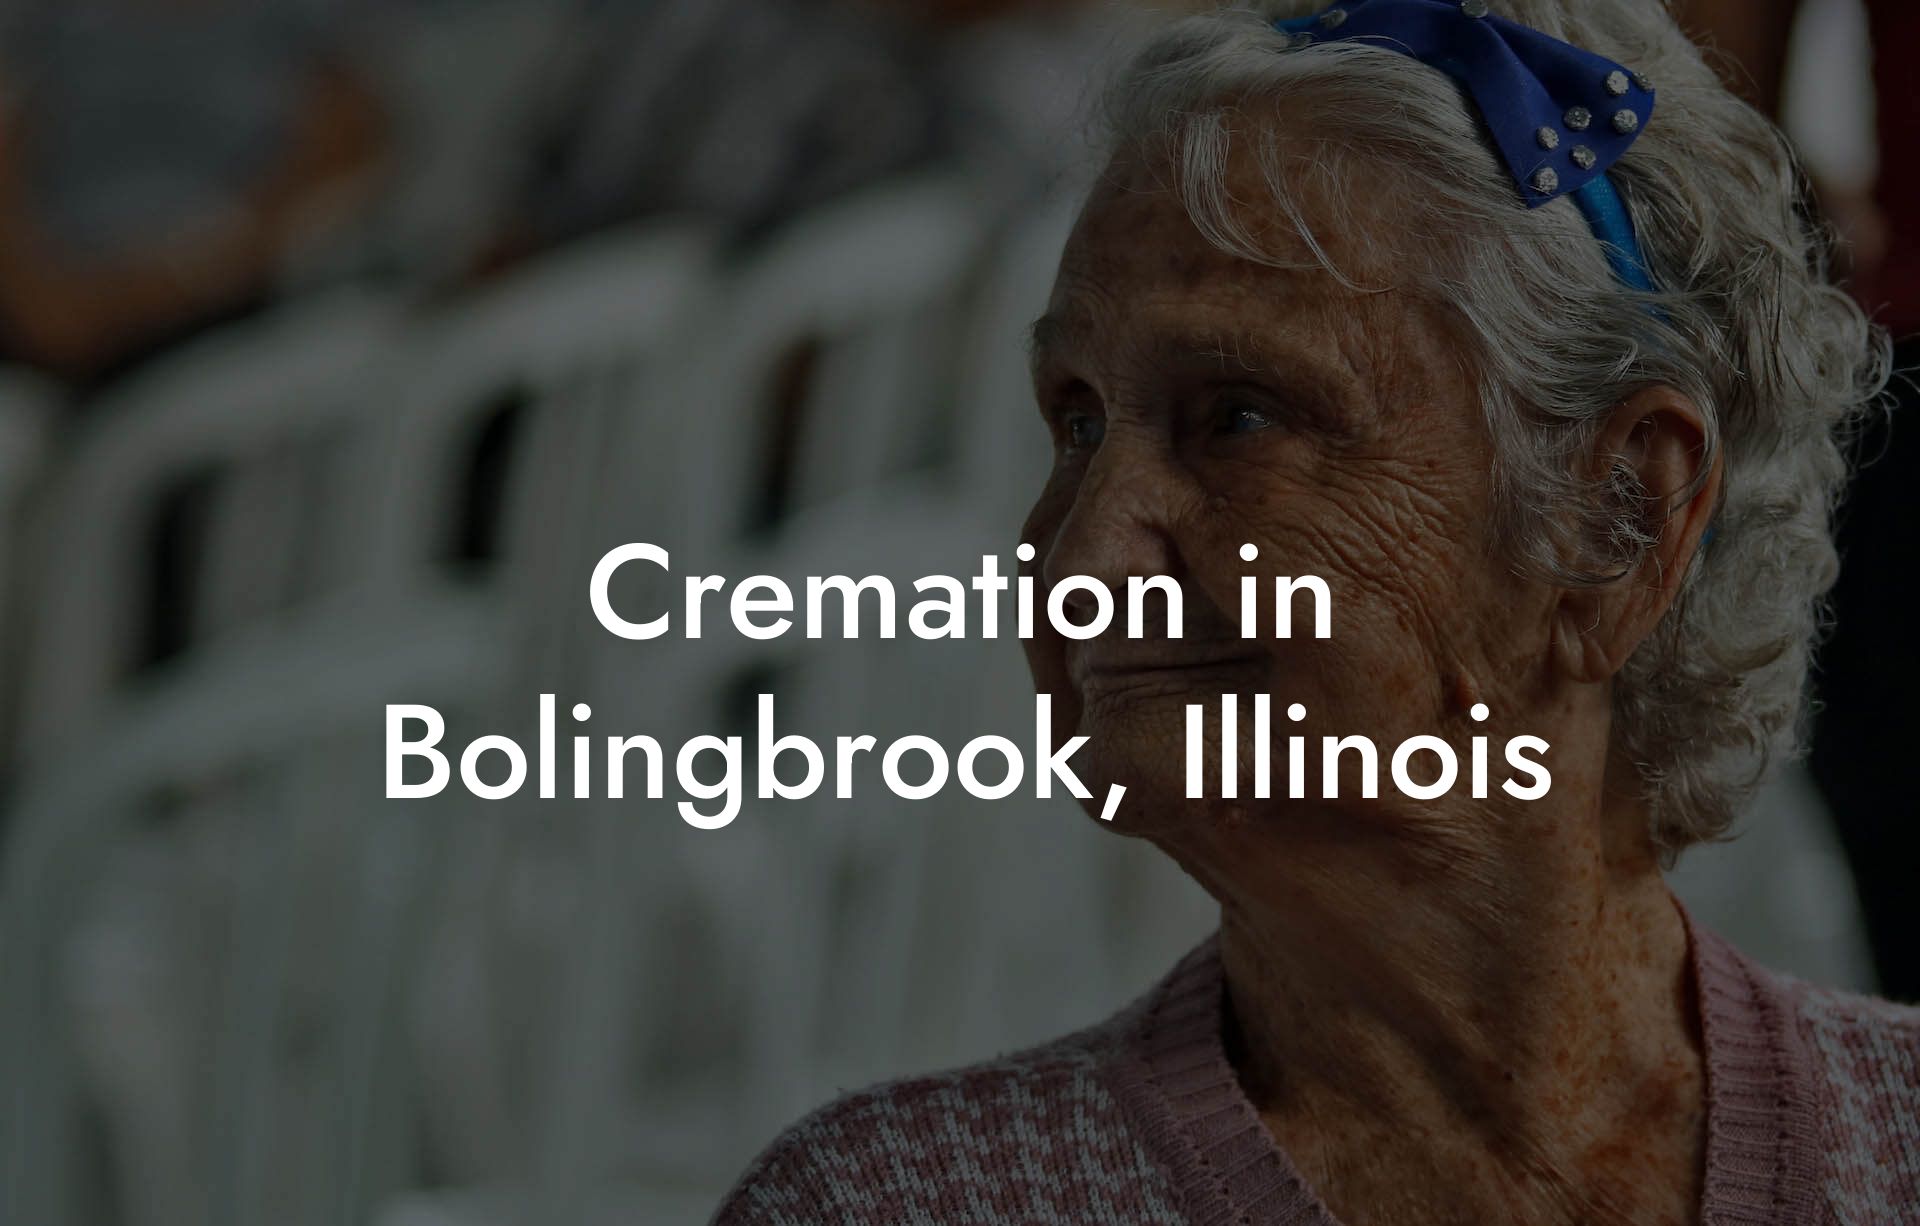 Cremation in Bolingbrook, Illinois